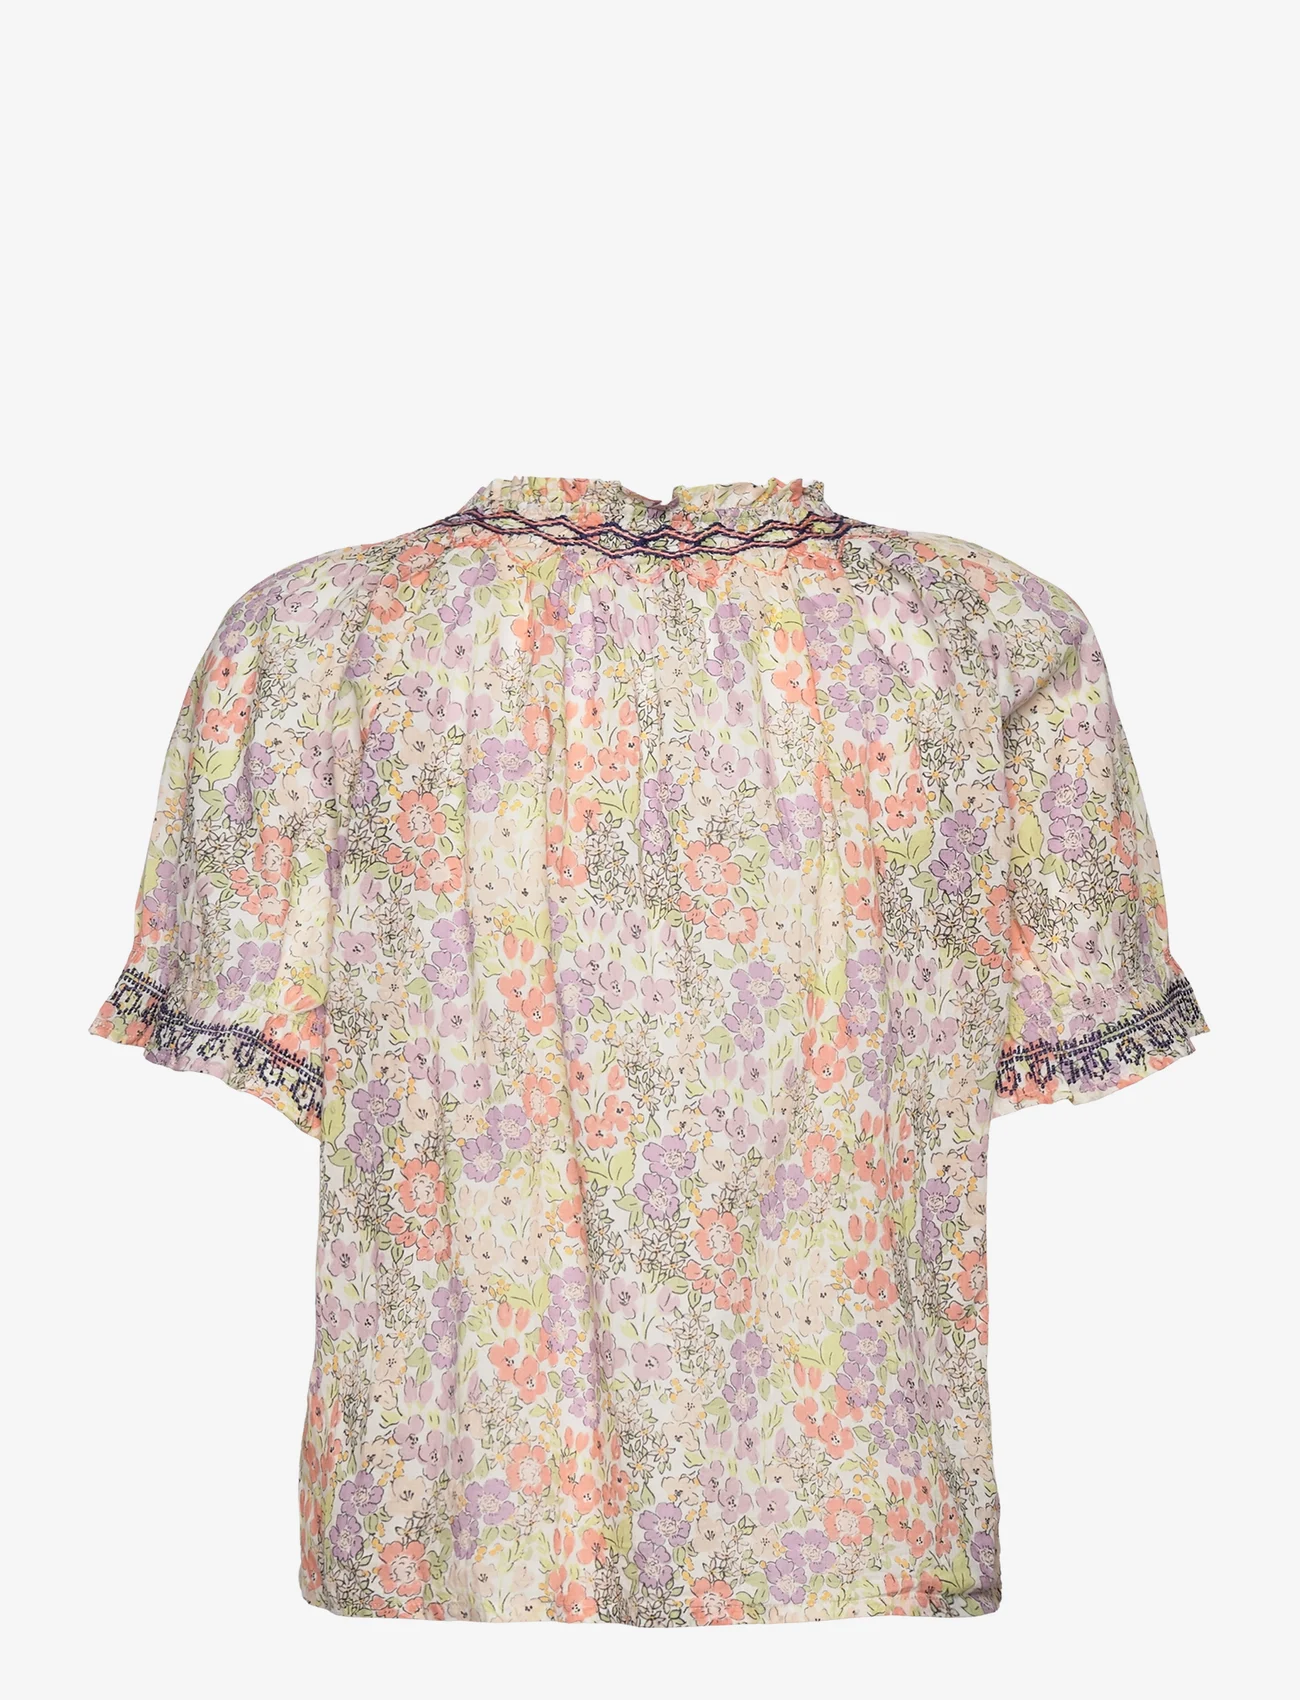 ODD MOLLY - Phoenix Blouse - short-sleeved blouses - lilac smoke - 1